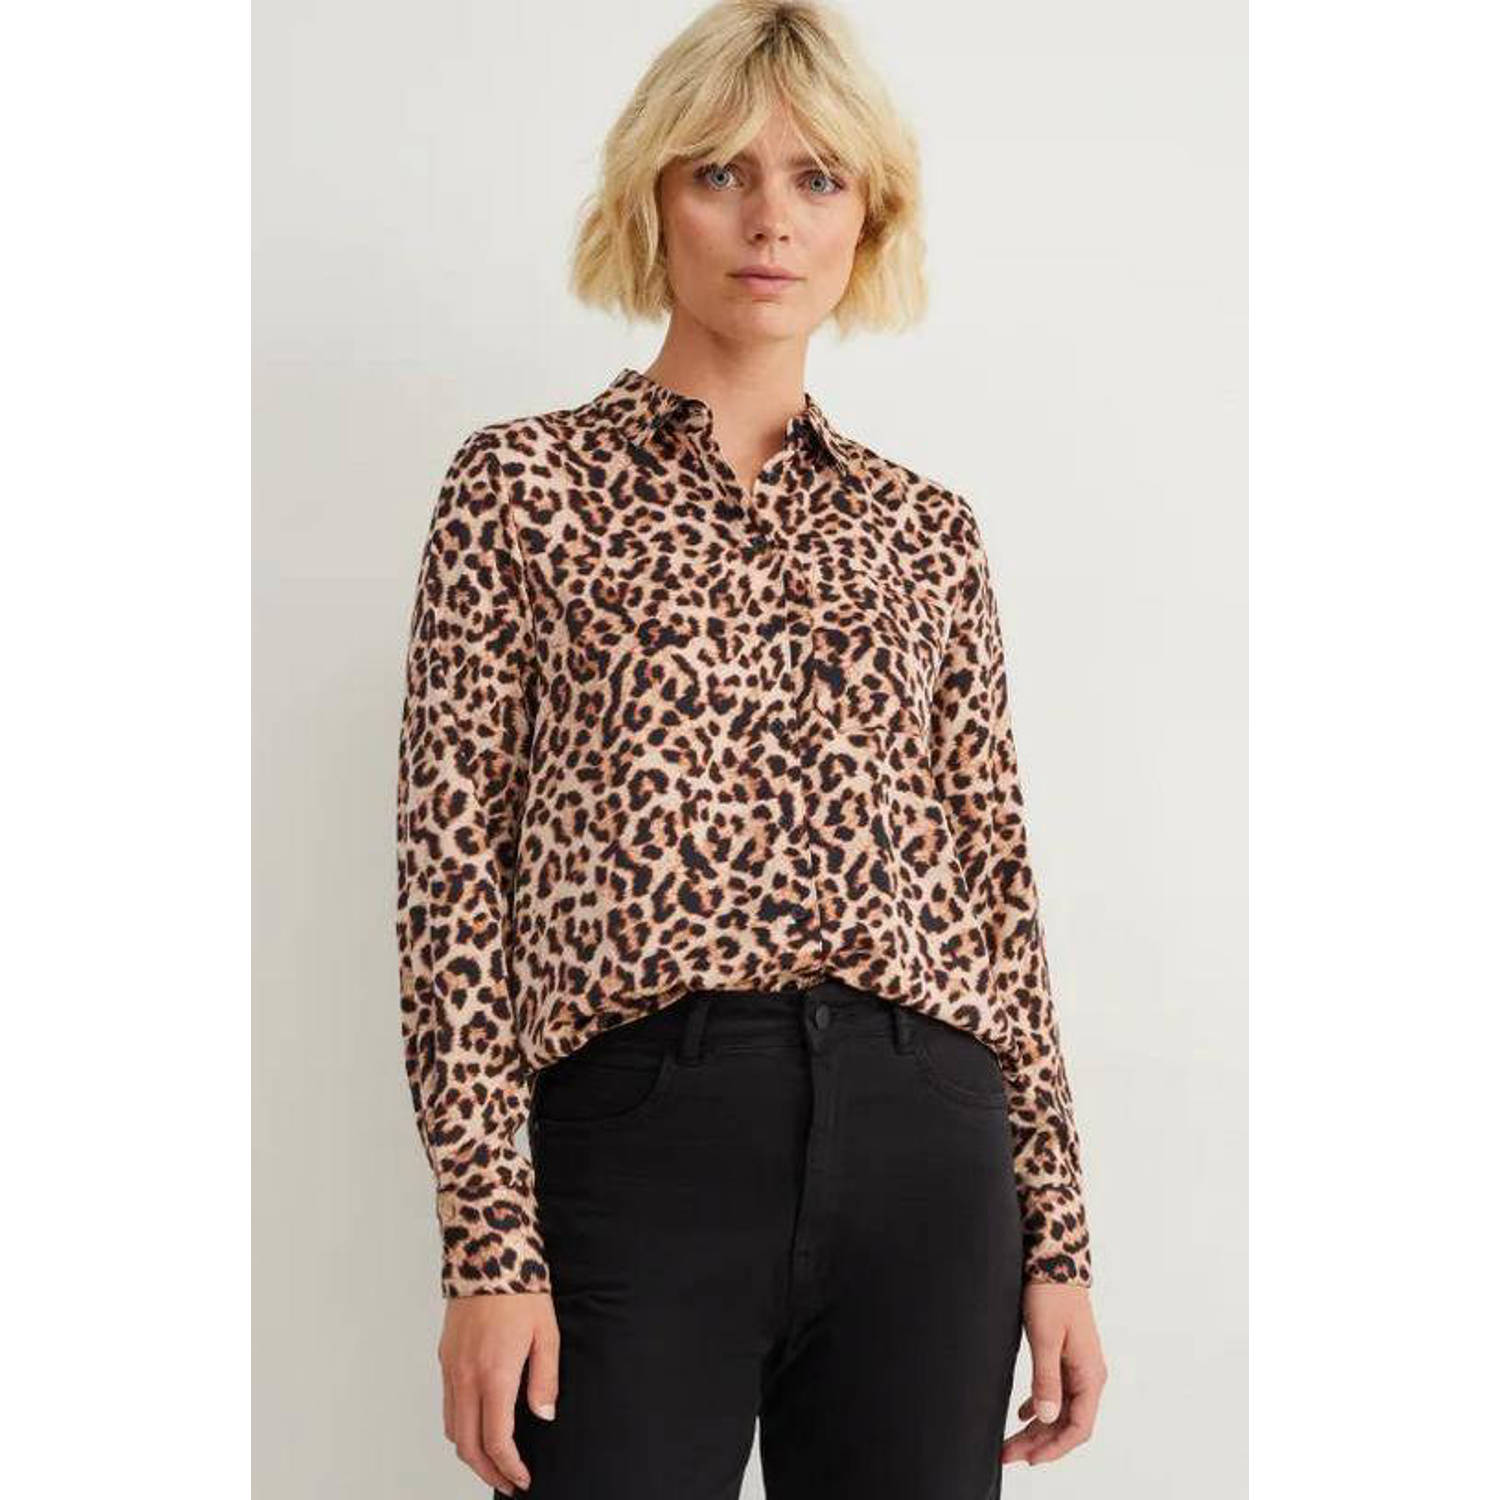 C&A blouse met panterprint ecru bruin donkerbruin